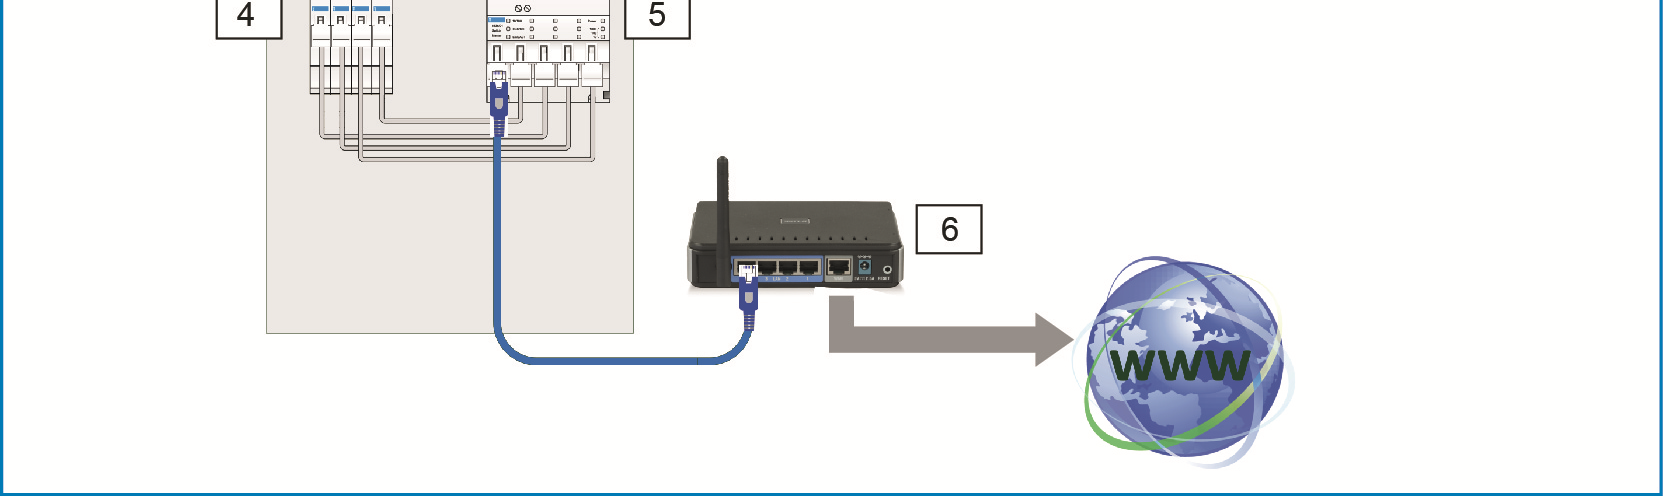 Verdeling [3] IP-router 7.2.